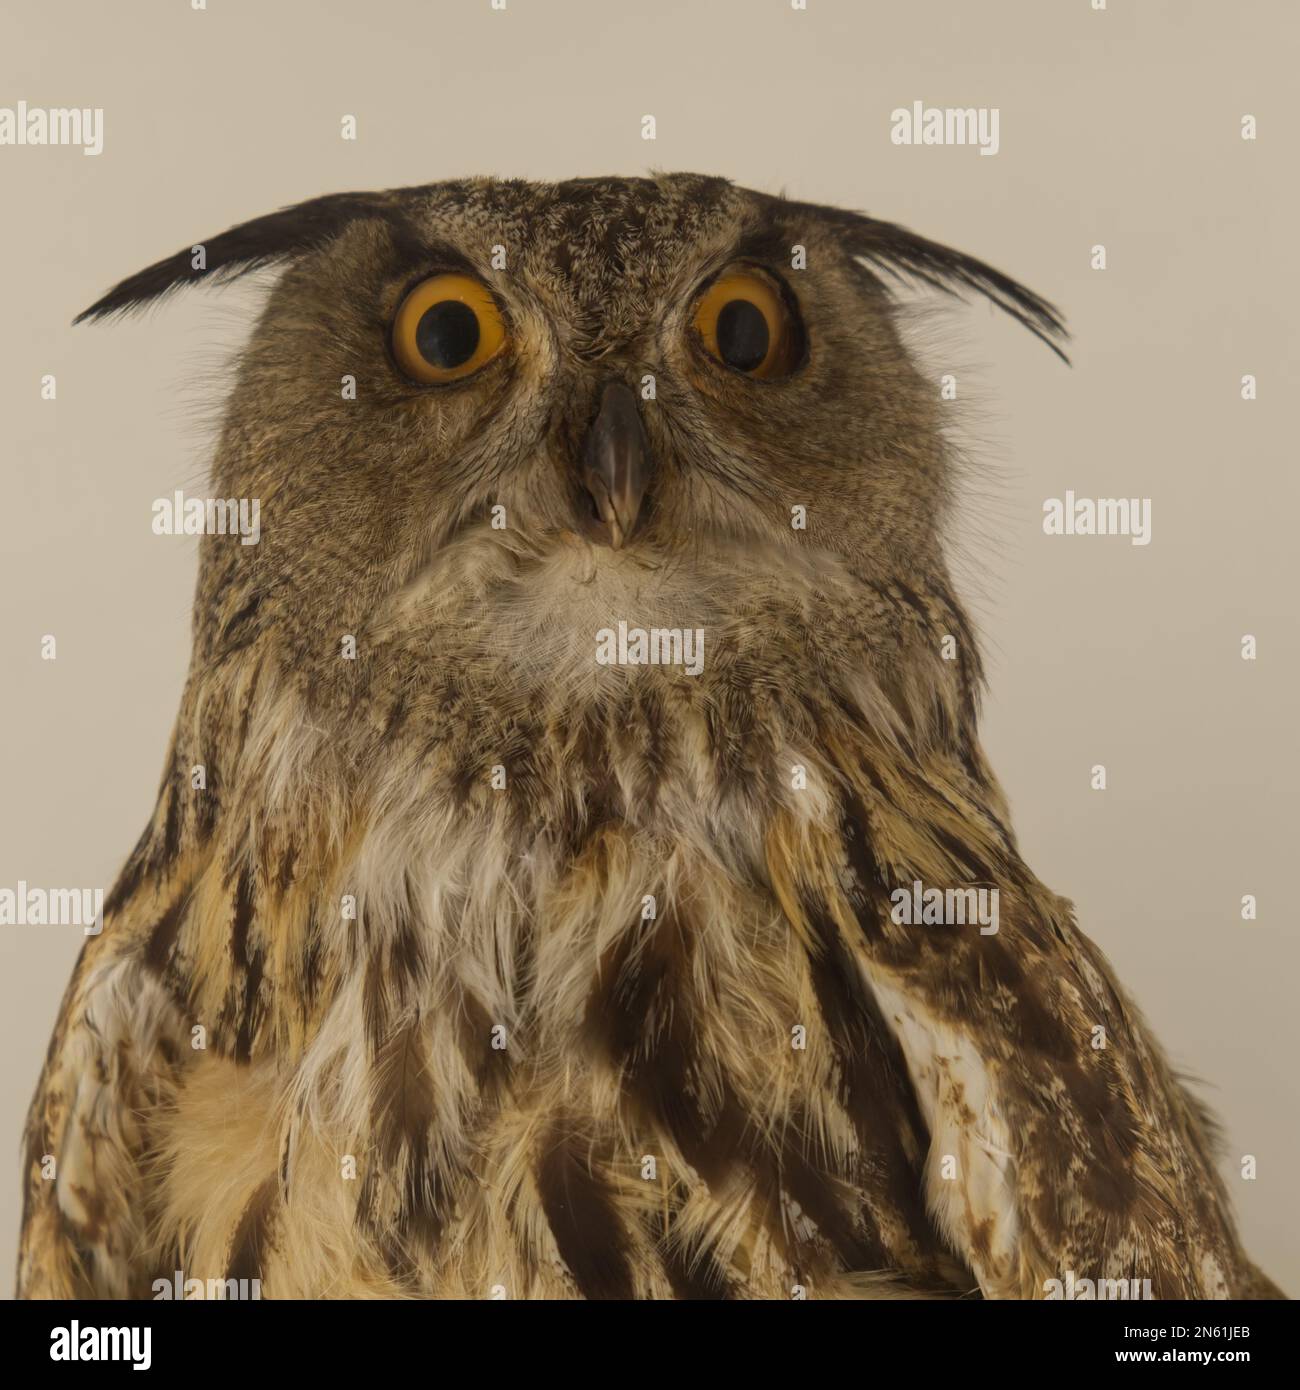 half-length of a bird of prey of the owl species Stock Photo